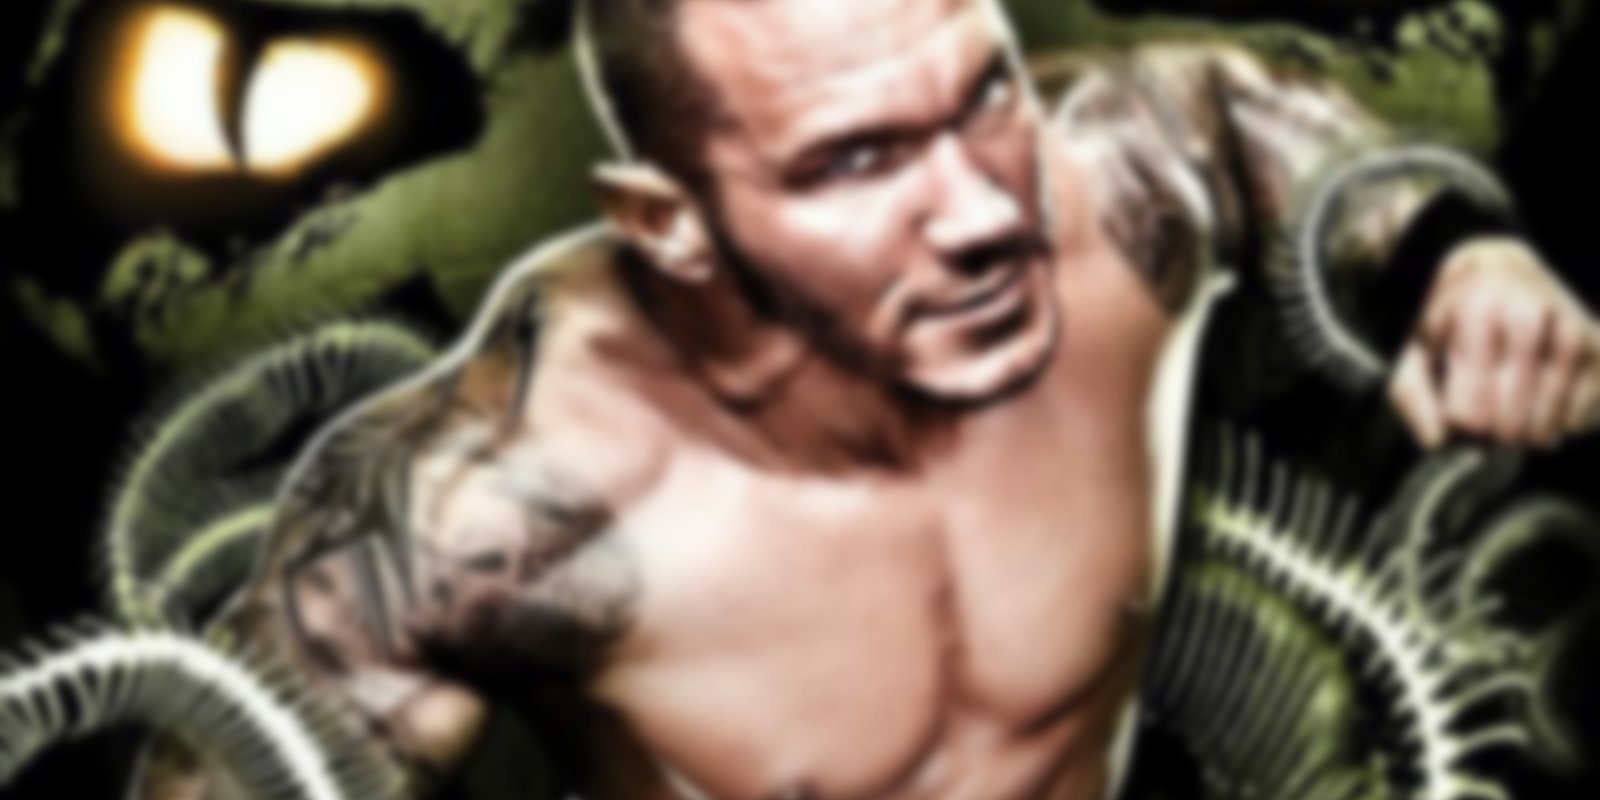 WWE - Randy Orton